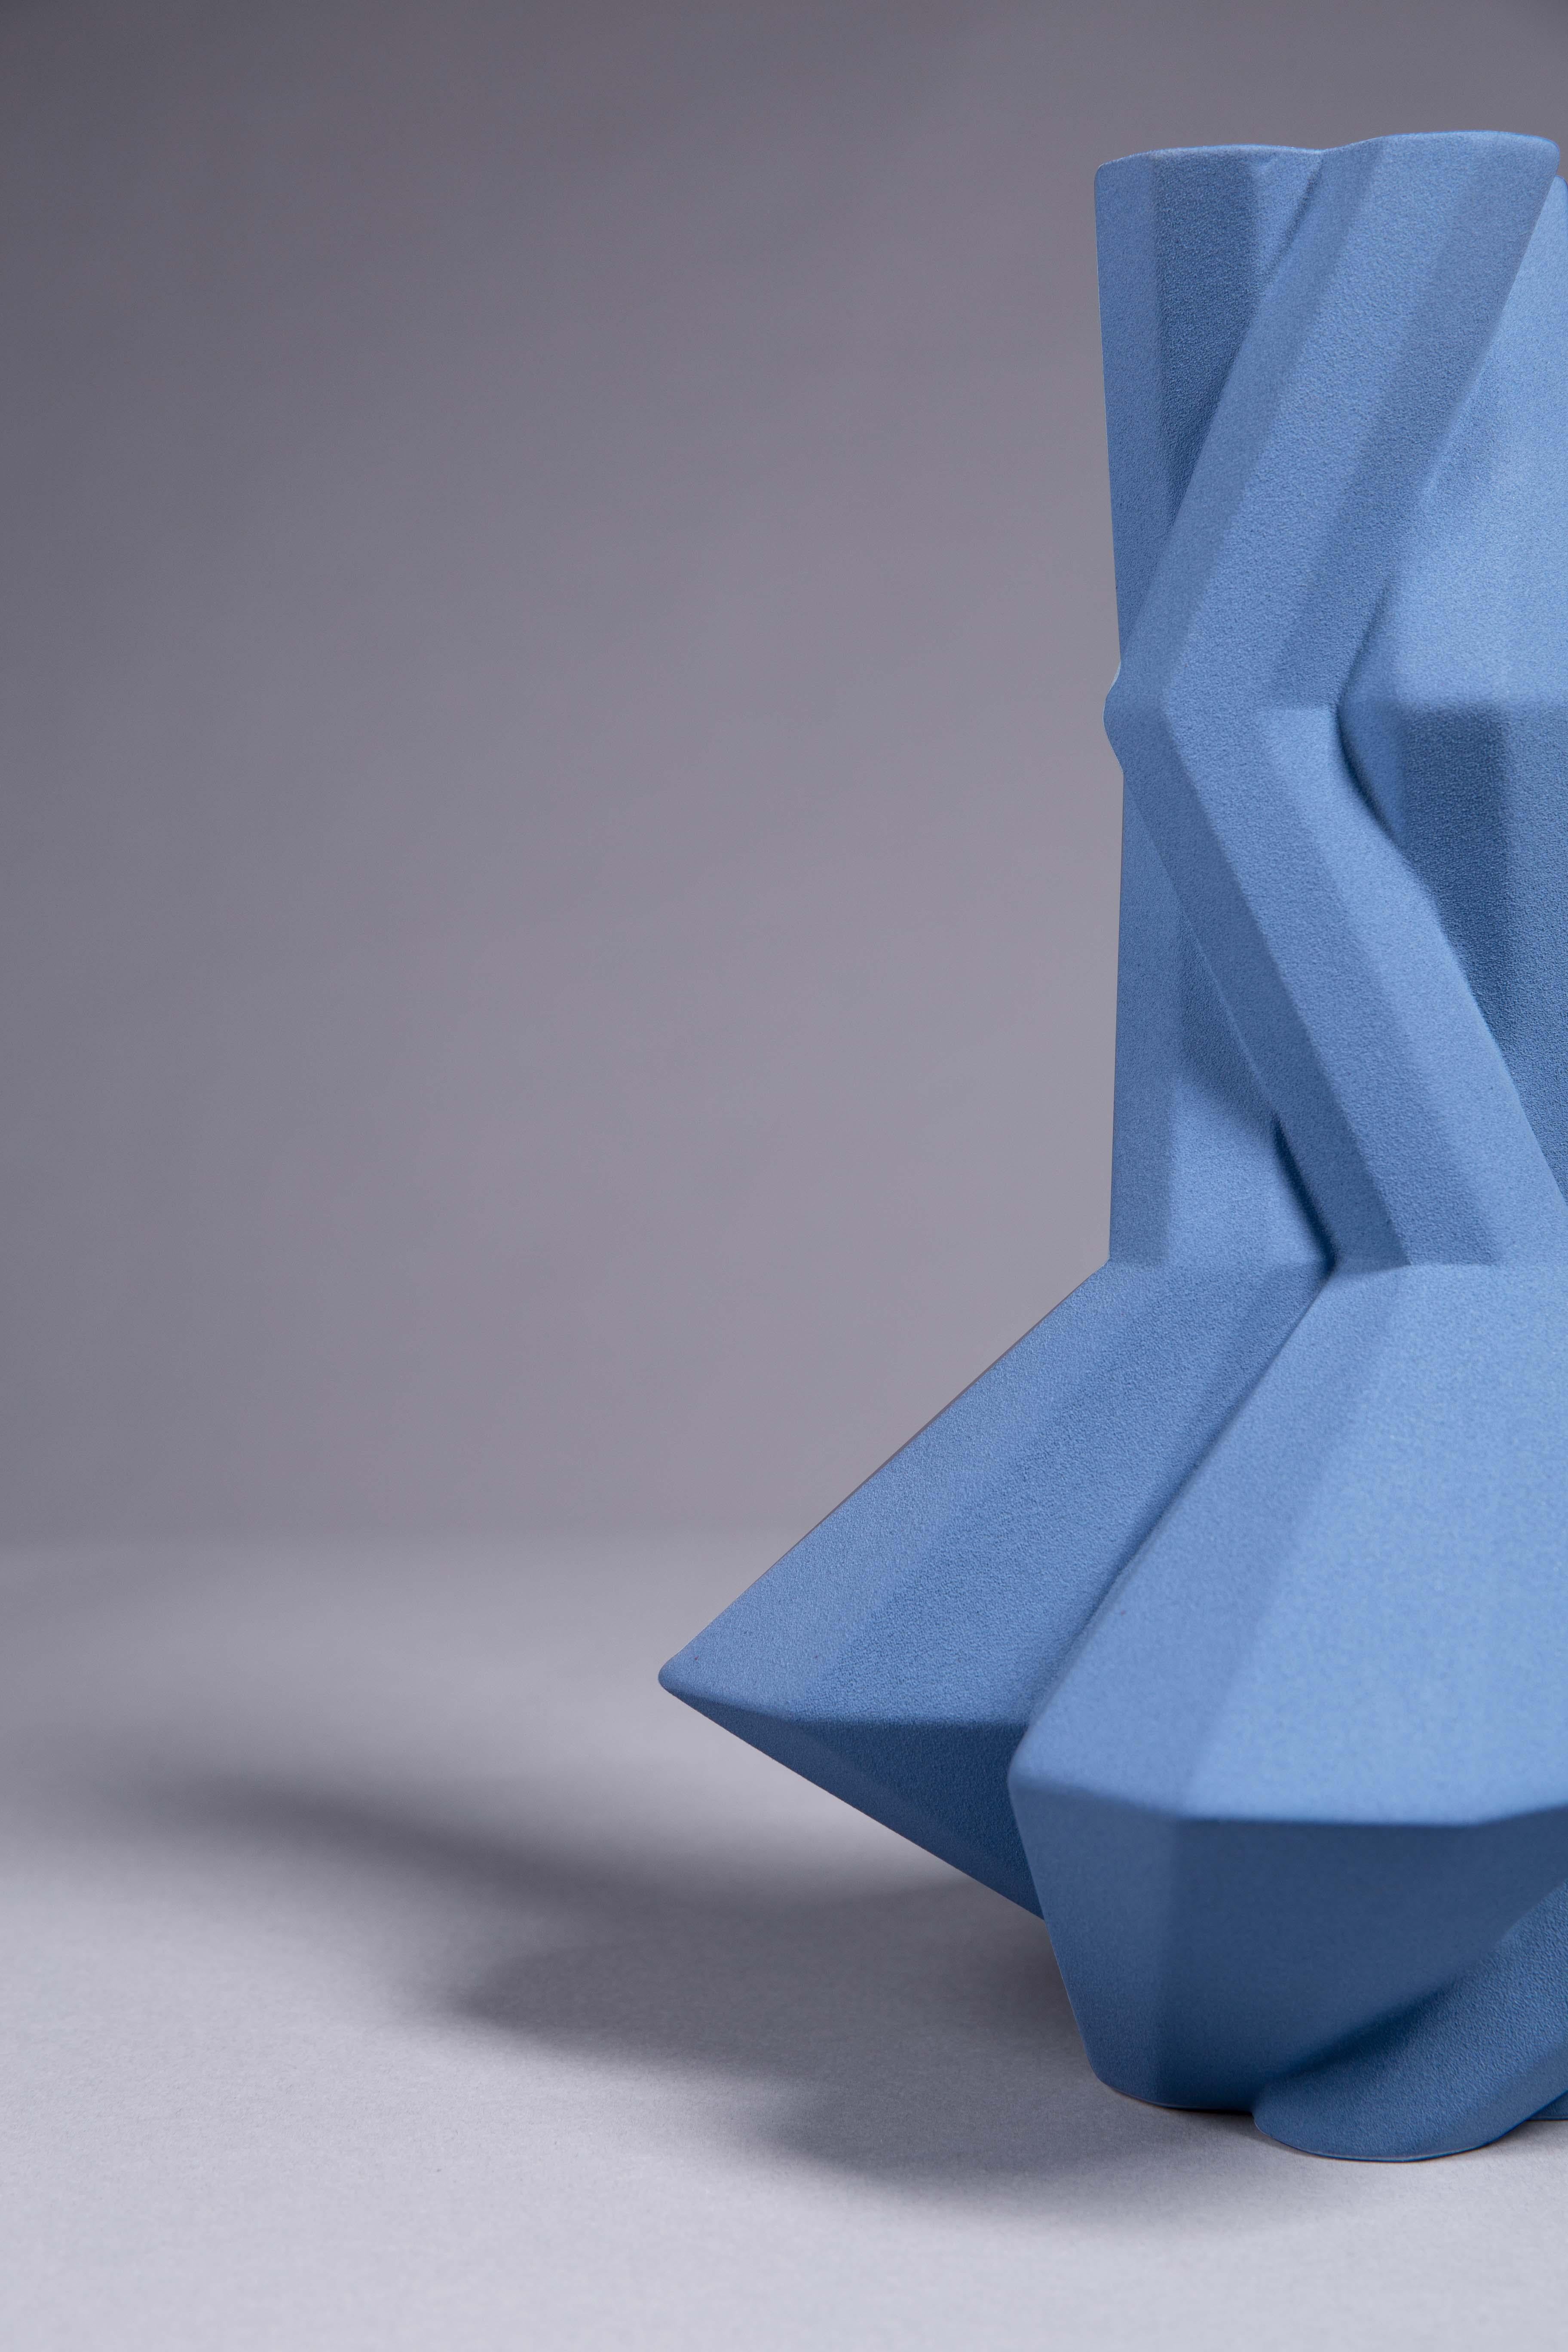 Modern Fortress Cupola Vase Blue Ceramic geometric Contemporary, Lara Bohinc, in Stock